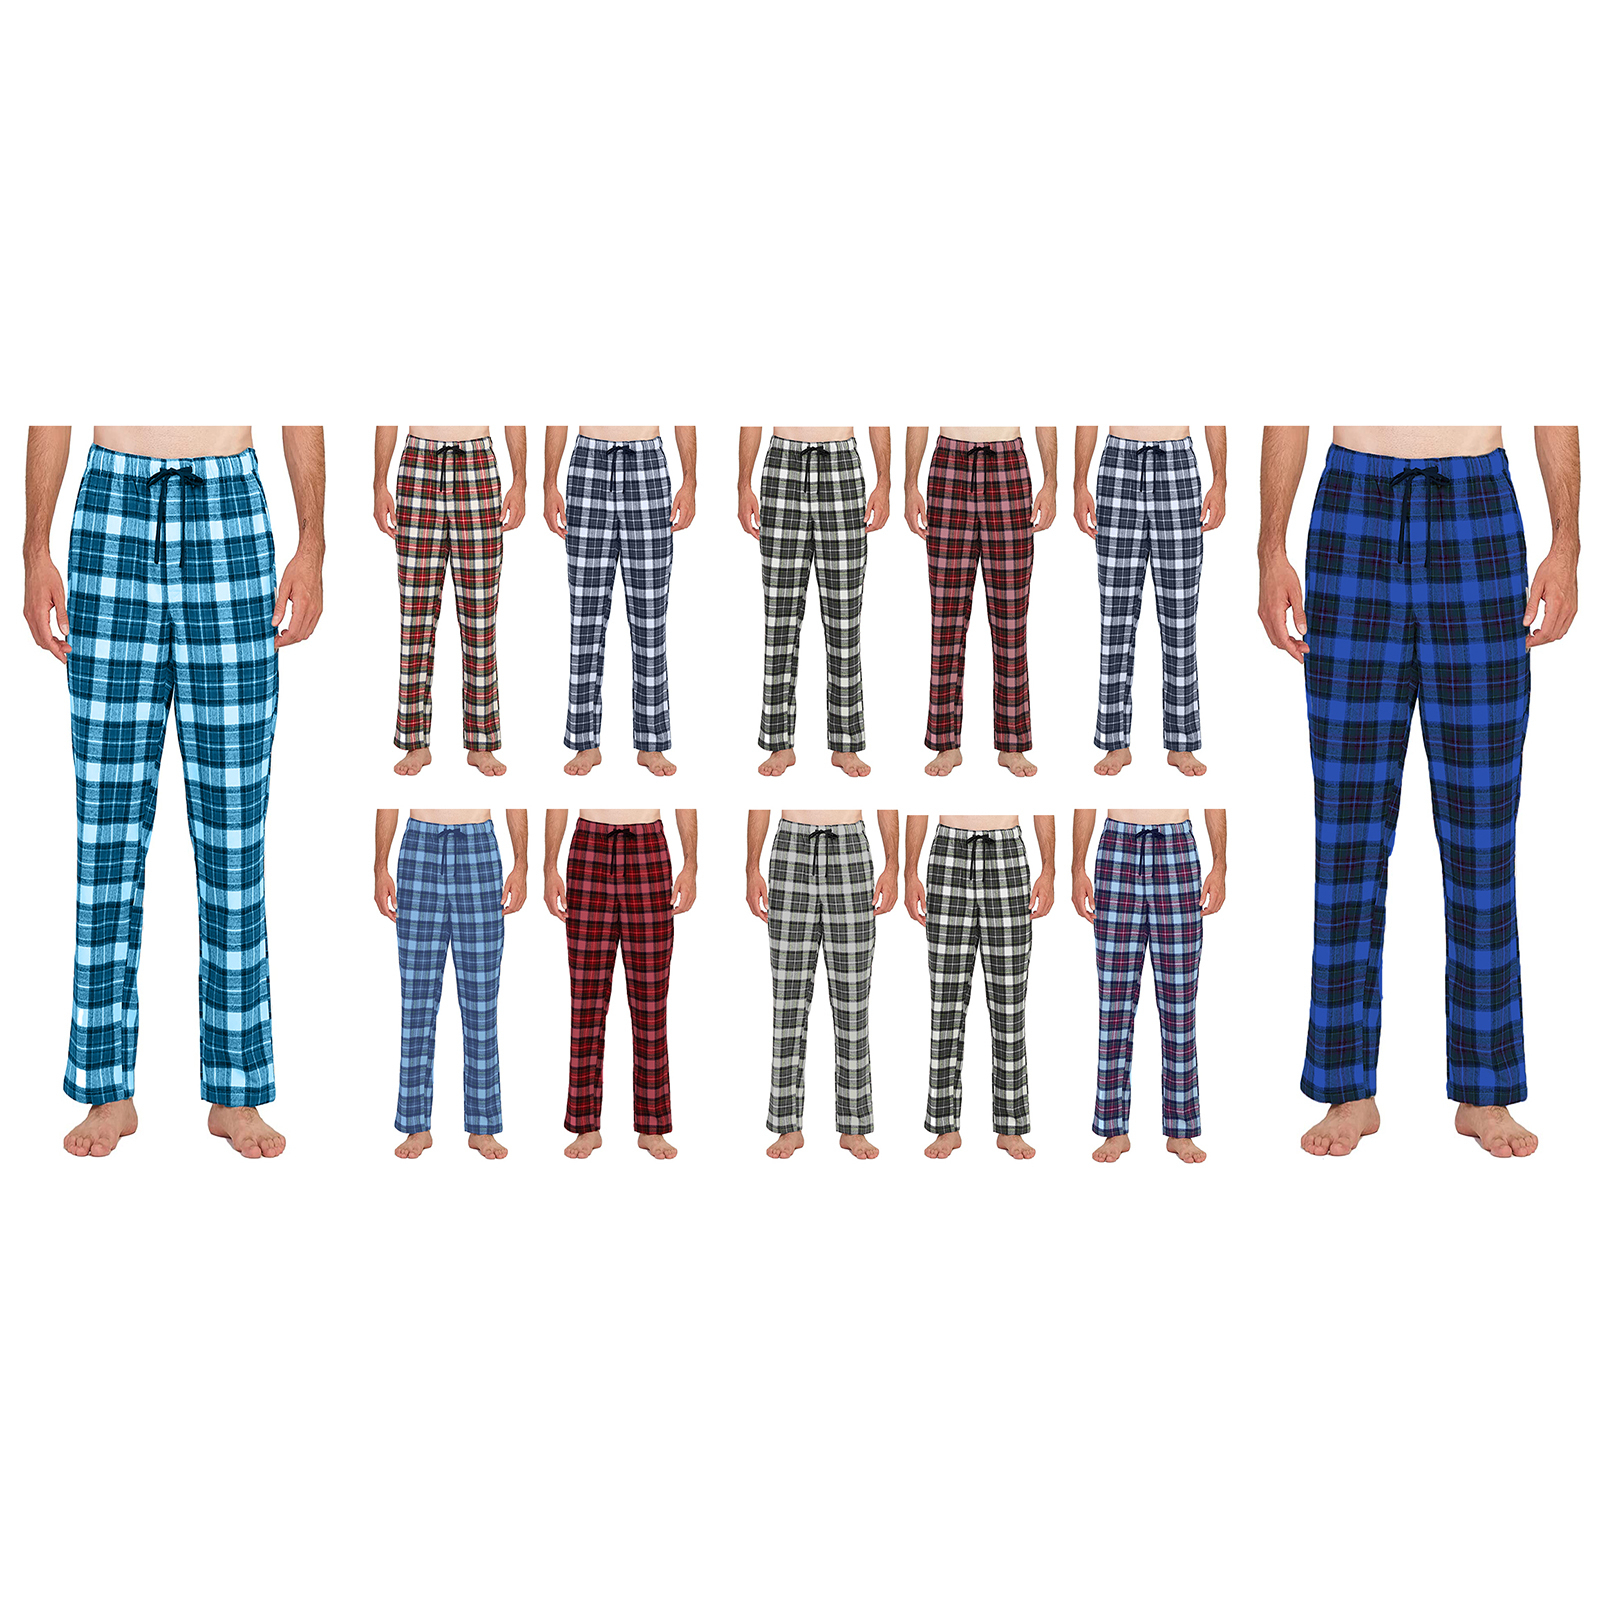 Men's Soft 100% Cotton Flannel Plaid Lounge Pajama Sleep Pants - 1-Pack, Small